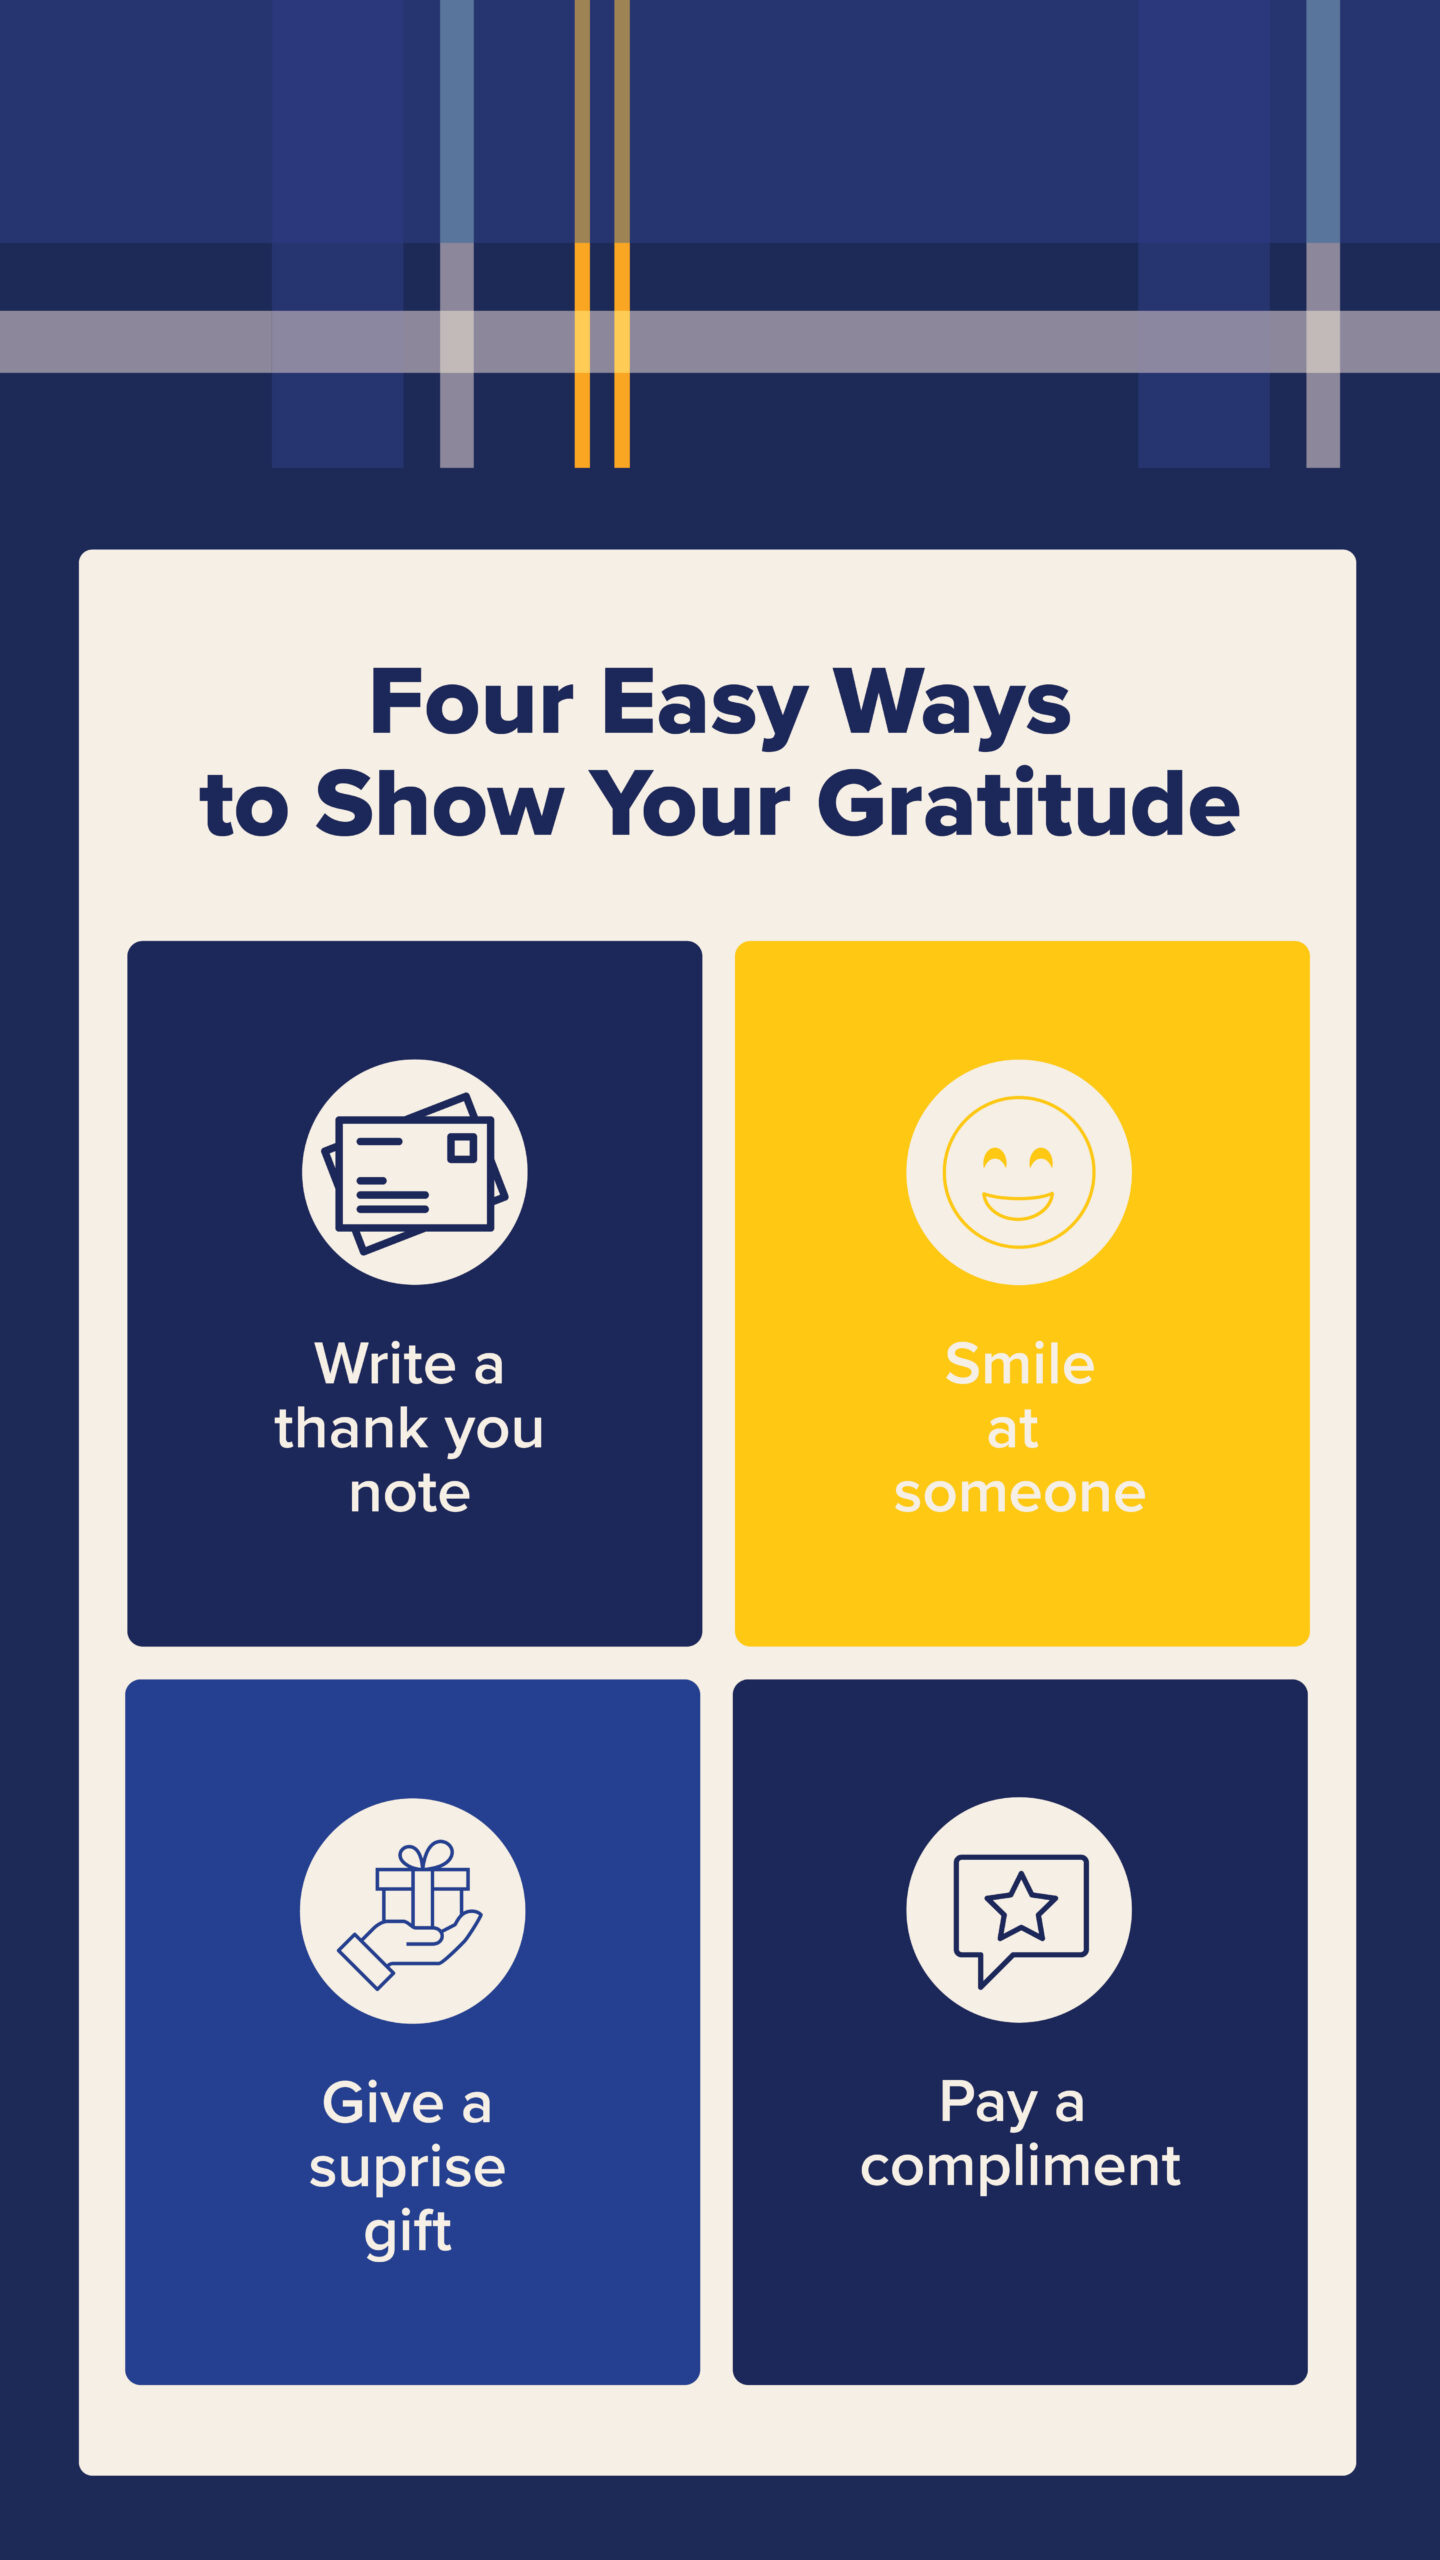 Four Easy Ways to Show Your Gratitude graphics